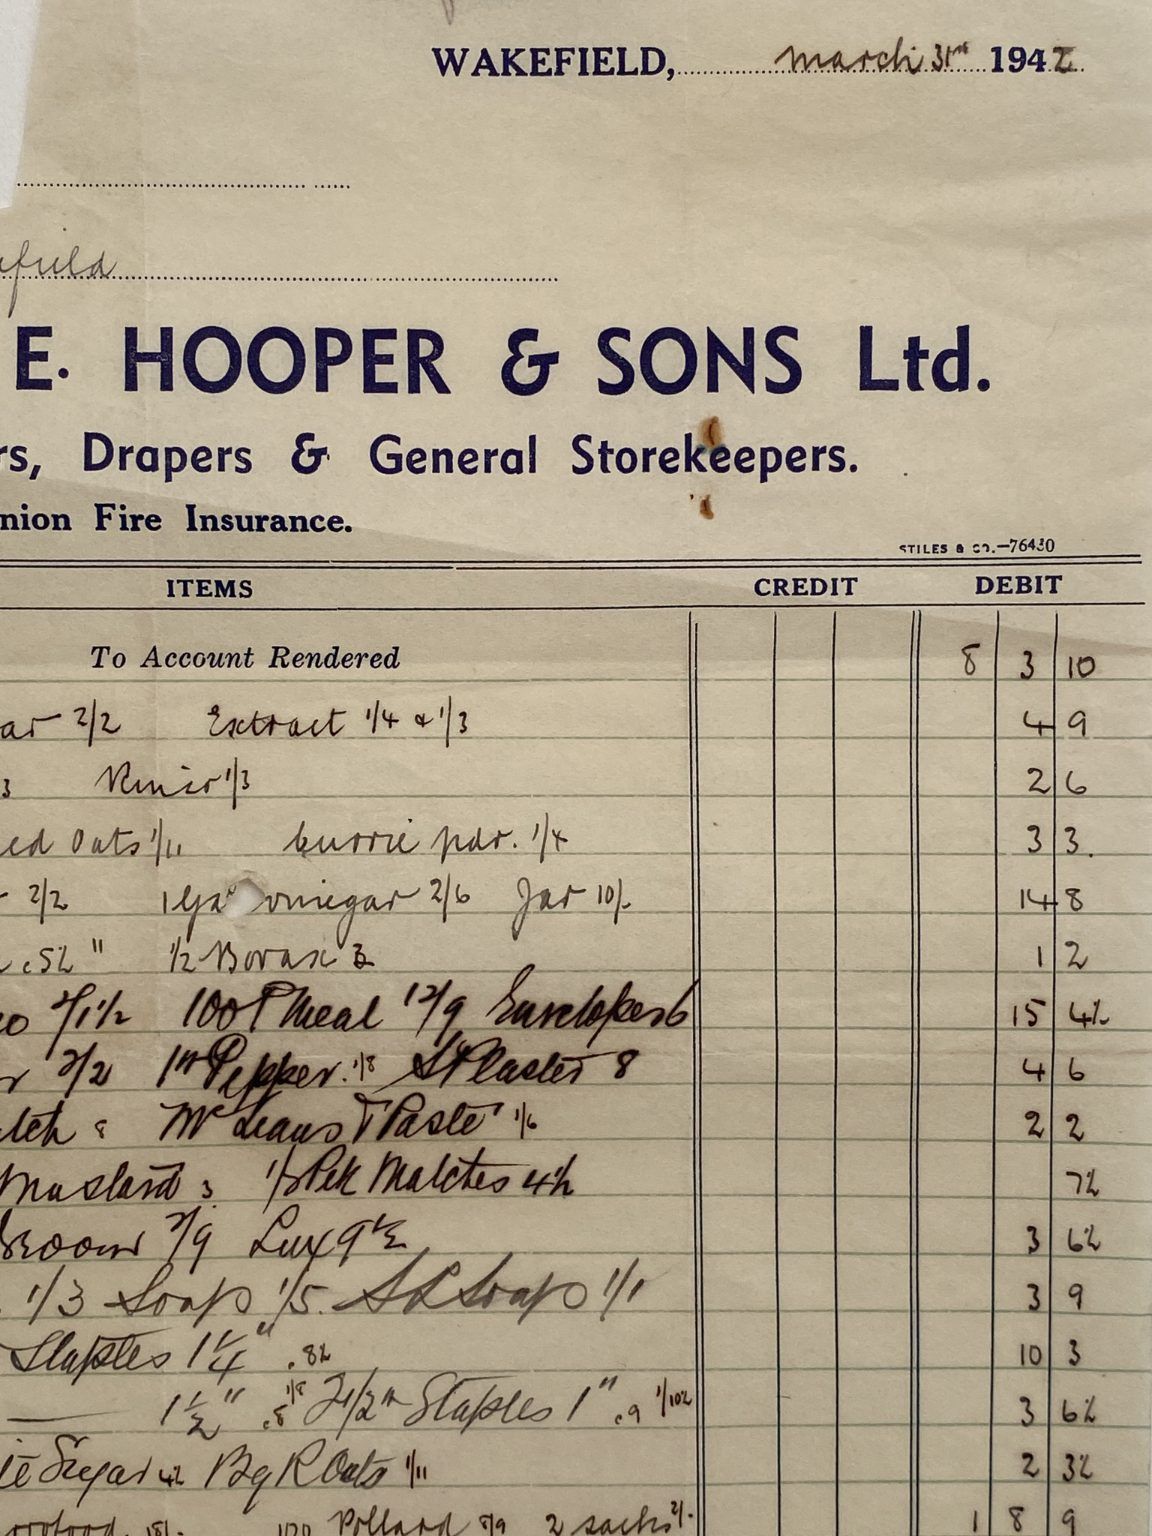 VINTAGE INVOICE / RECEIPT: E. Hooper & Sons Ltd. Wakefield – Grocers 1942